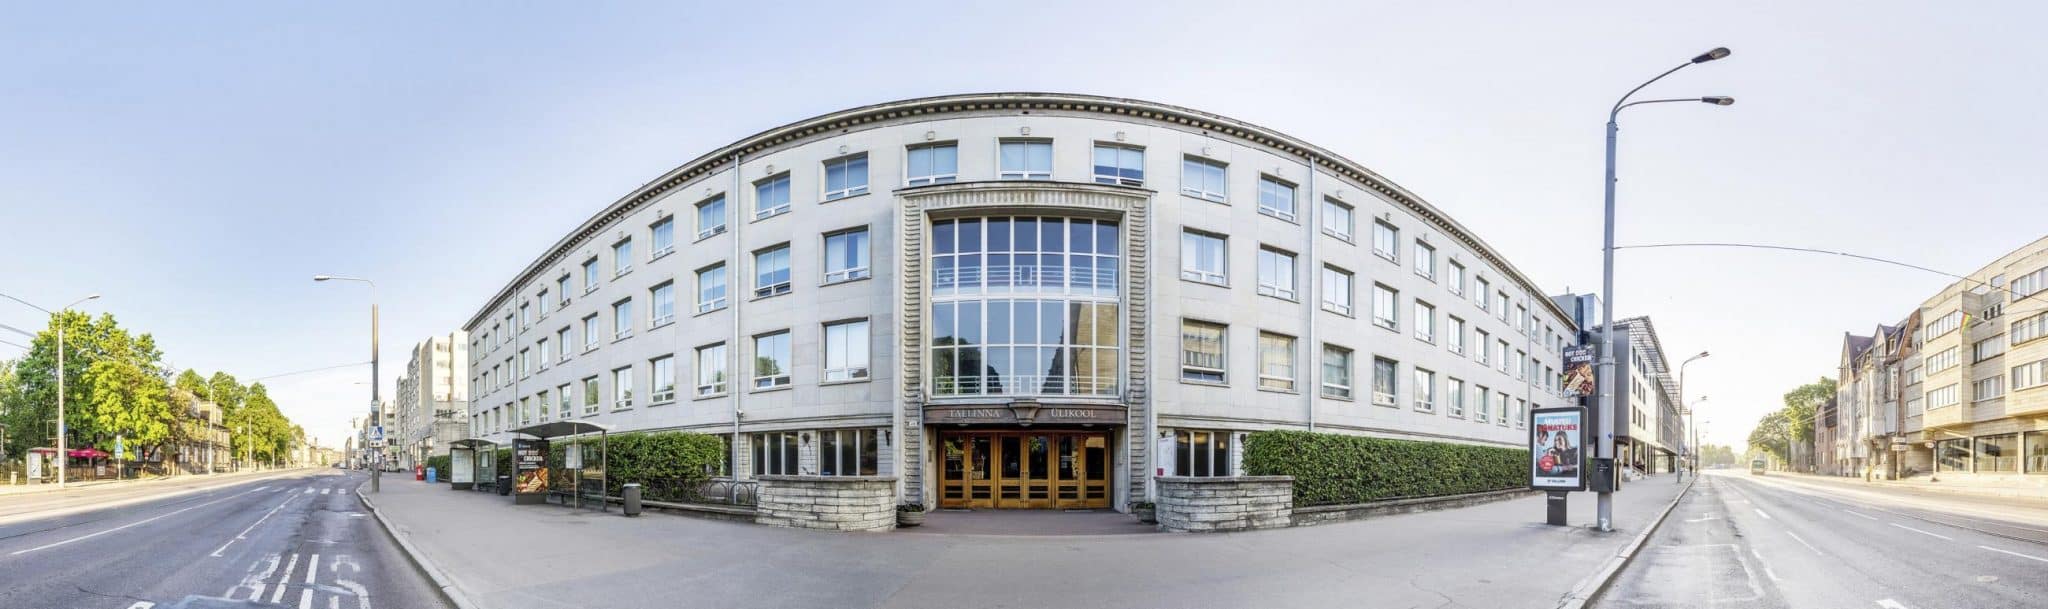 alt - Эстония, Tallinn University, Бакалавриат,Магистратура, 1